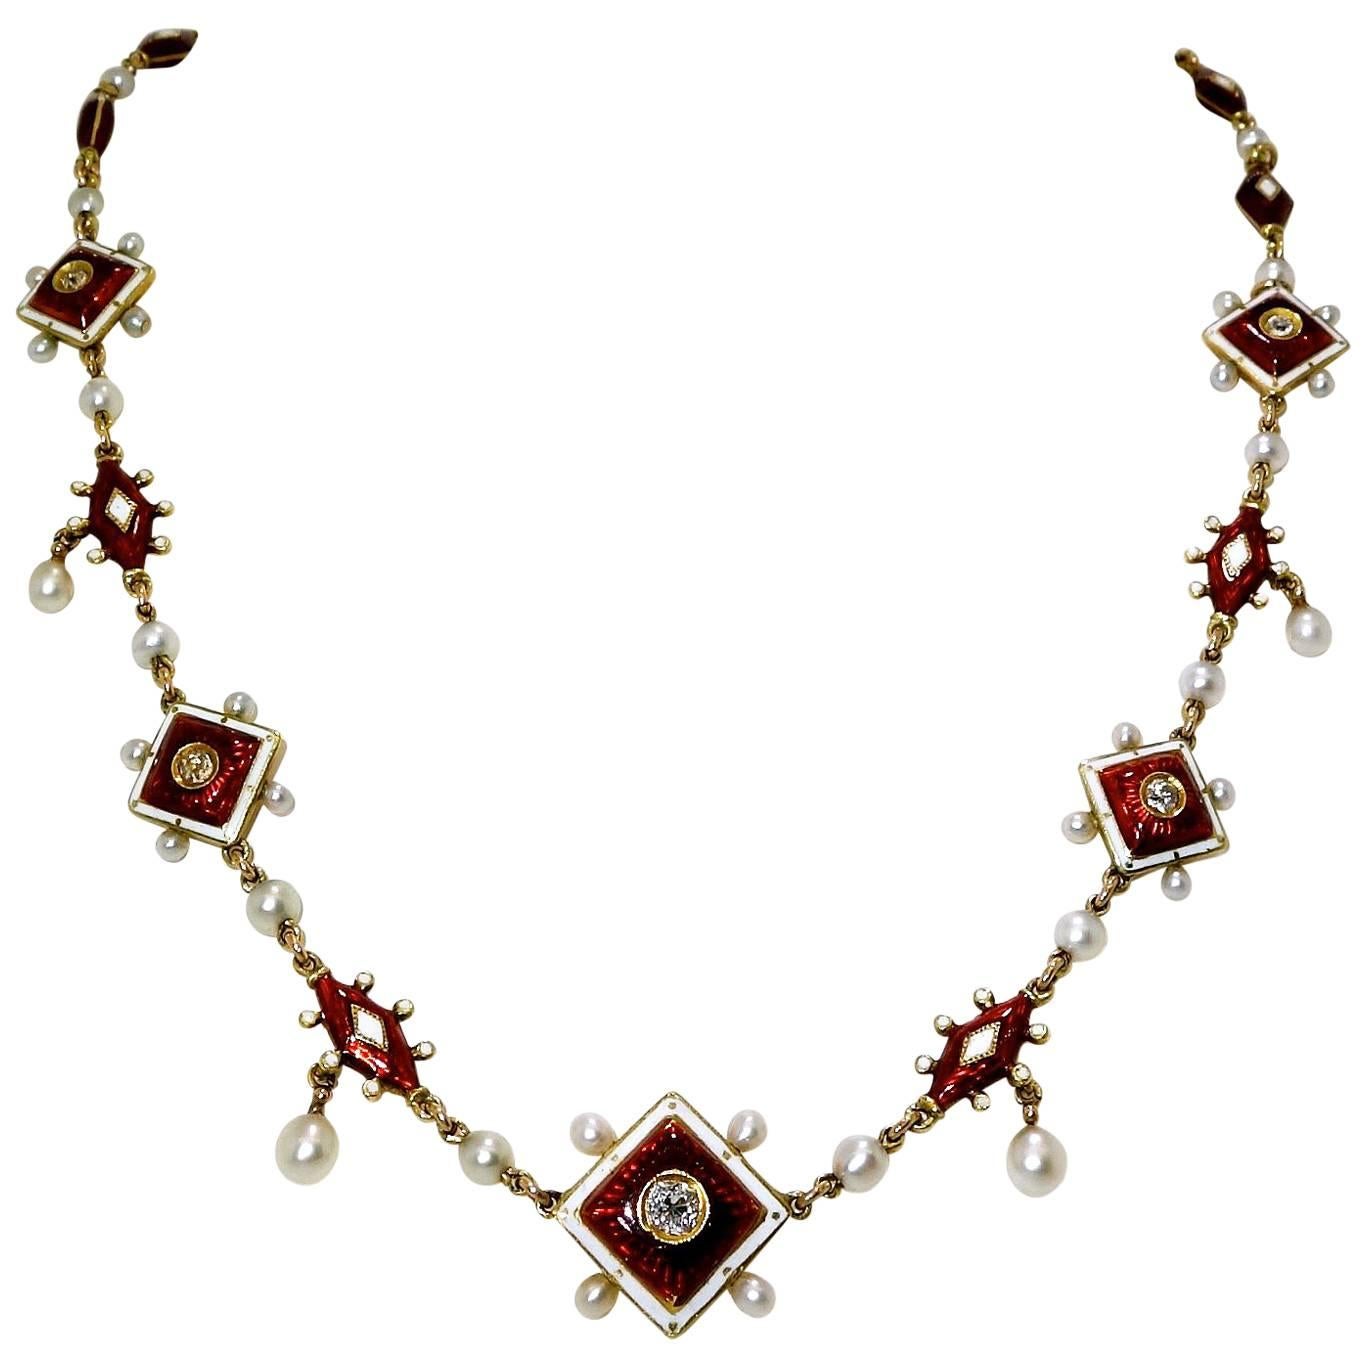 Antique Enamel, Diamond and Natural Pearl Necklace, circa 1880